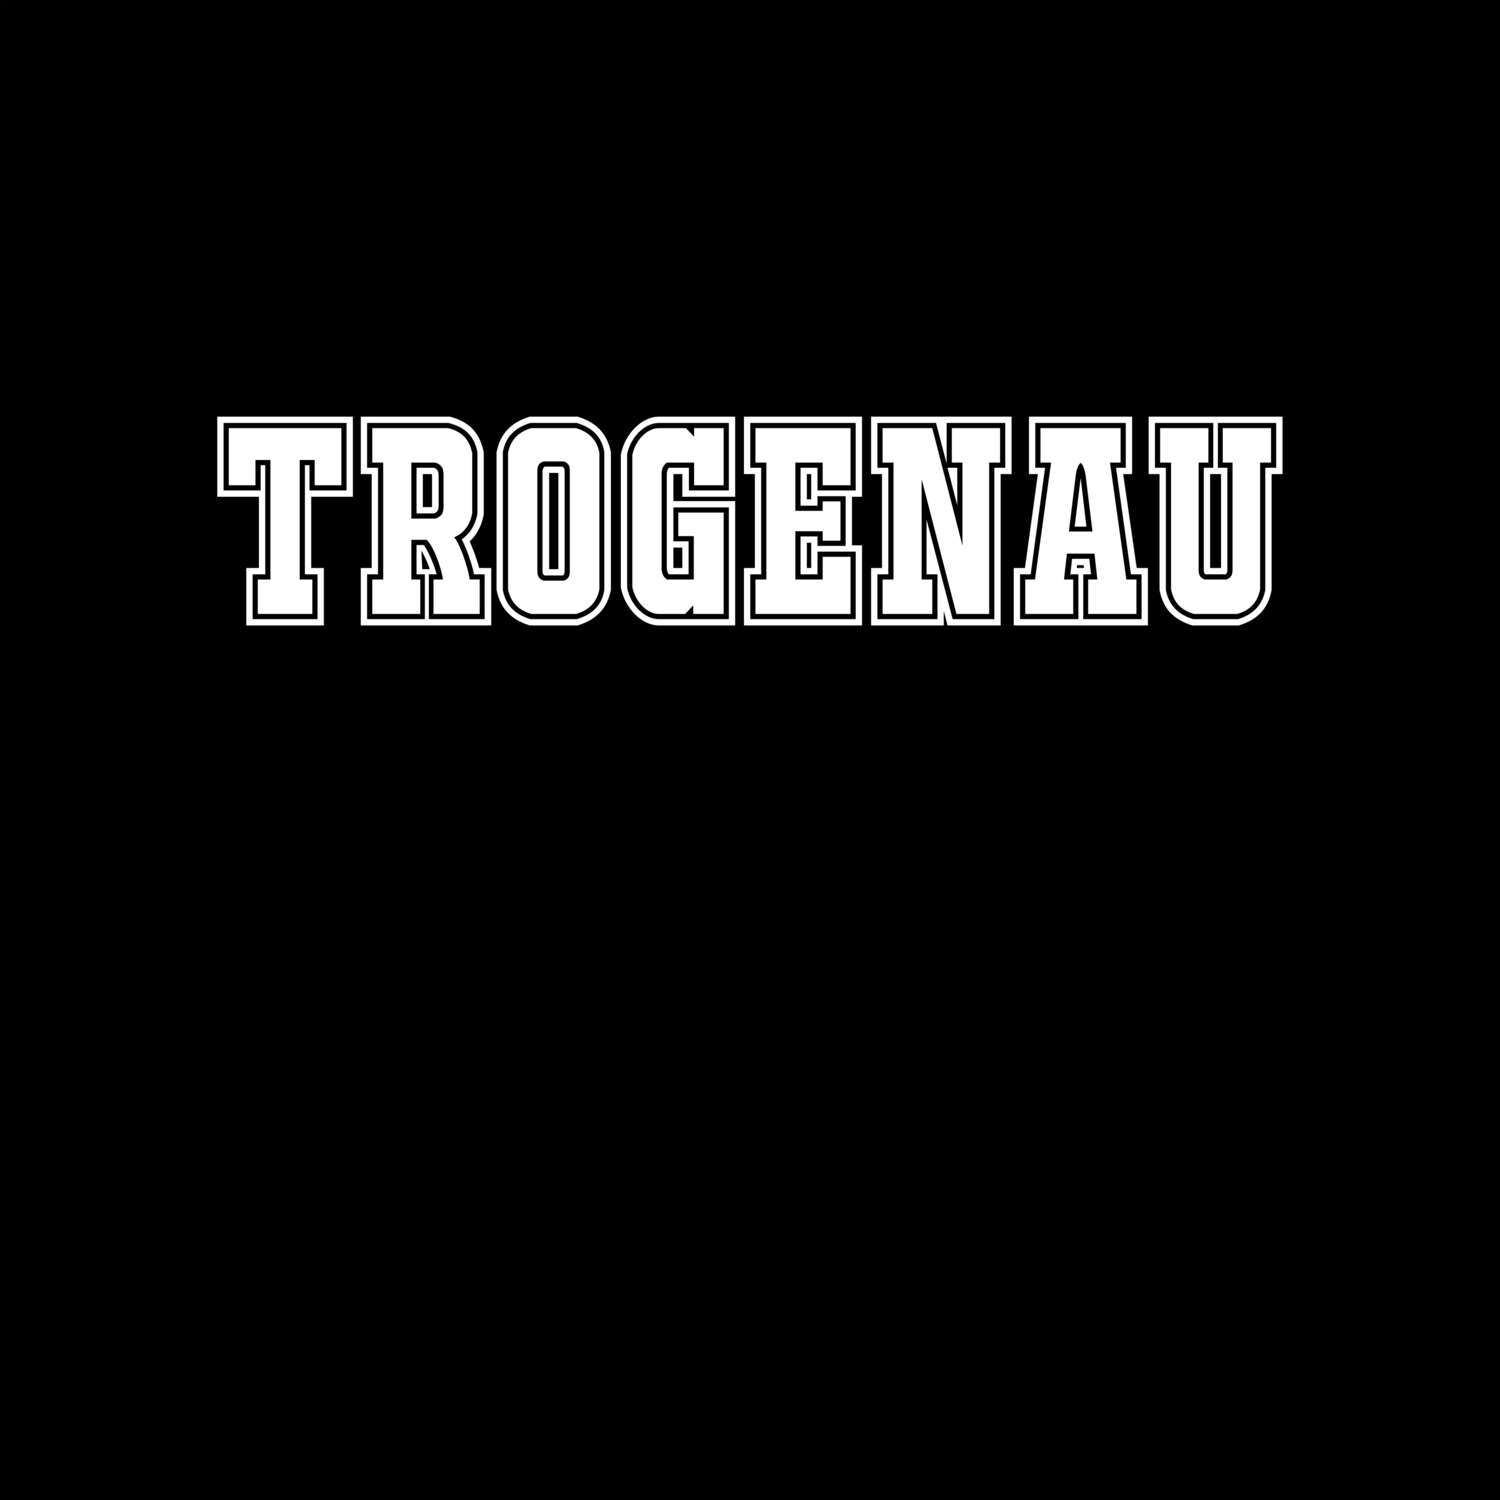 Trogenau T-Shirt »Classic«